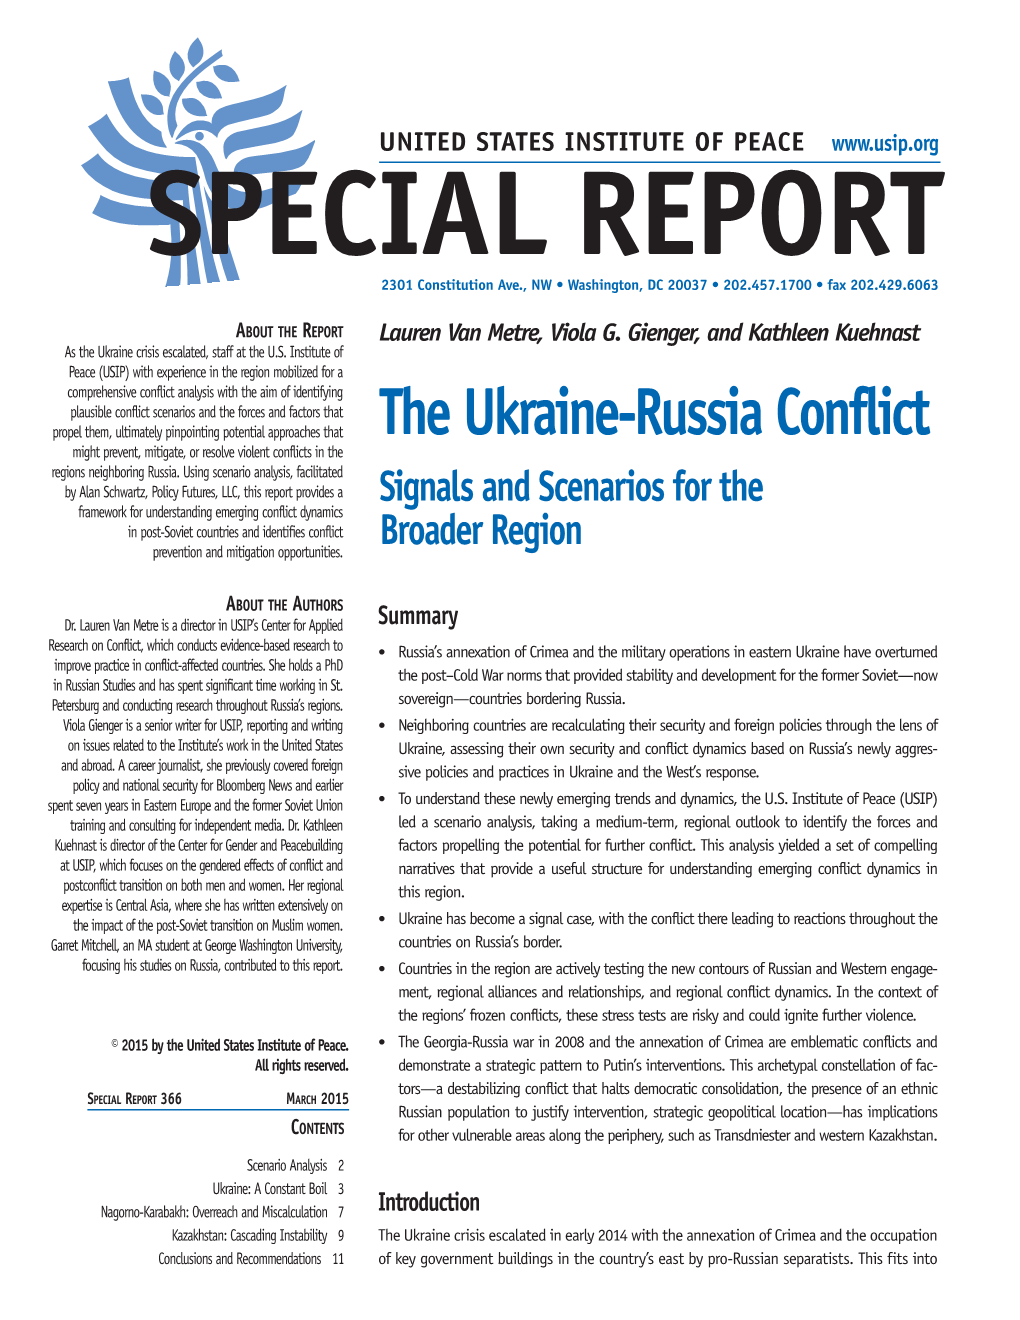 The Ukraine-Russia Conflict: Signals and Scenarios for the Broader Region